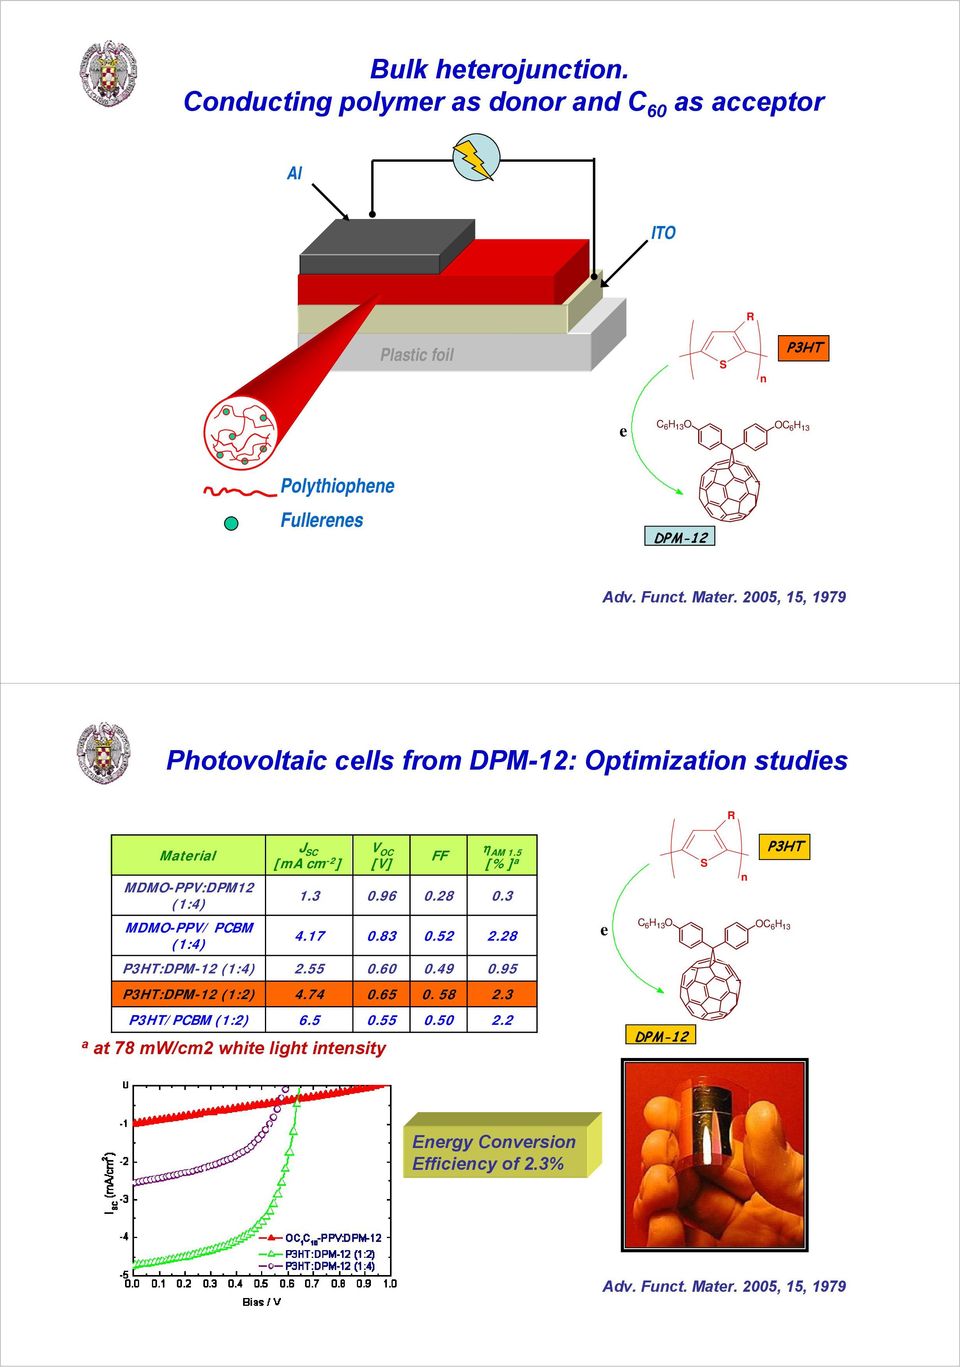 2005, 15, 1979 Photovoltaic cells from DPM-12: Optimization studies R Material MDMO-PPV:DPM12 (1:4) MDMO-PPV/ PCBM (1:4) J SC [ma cm -2 ] 1.3 4.17 V OC [V] 0.